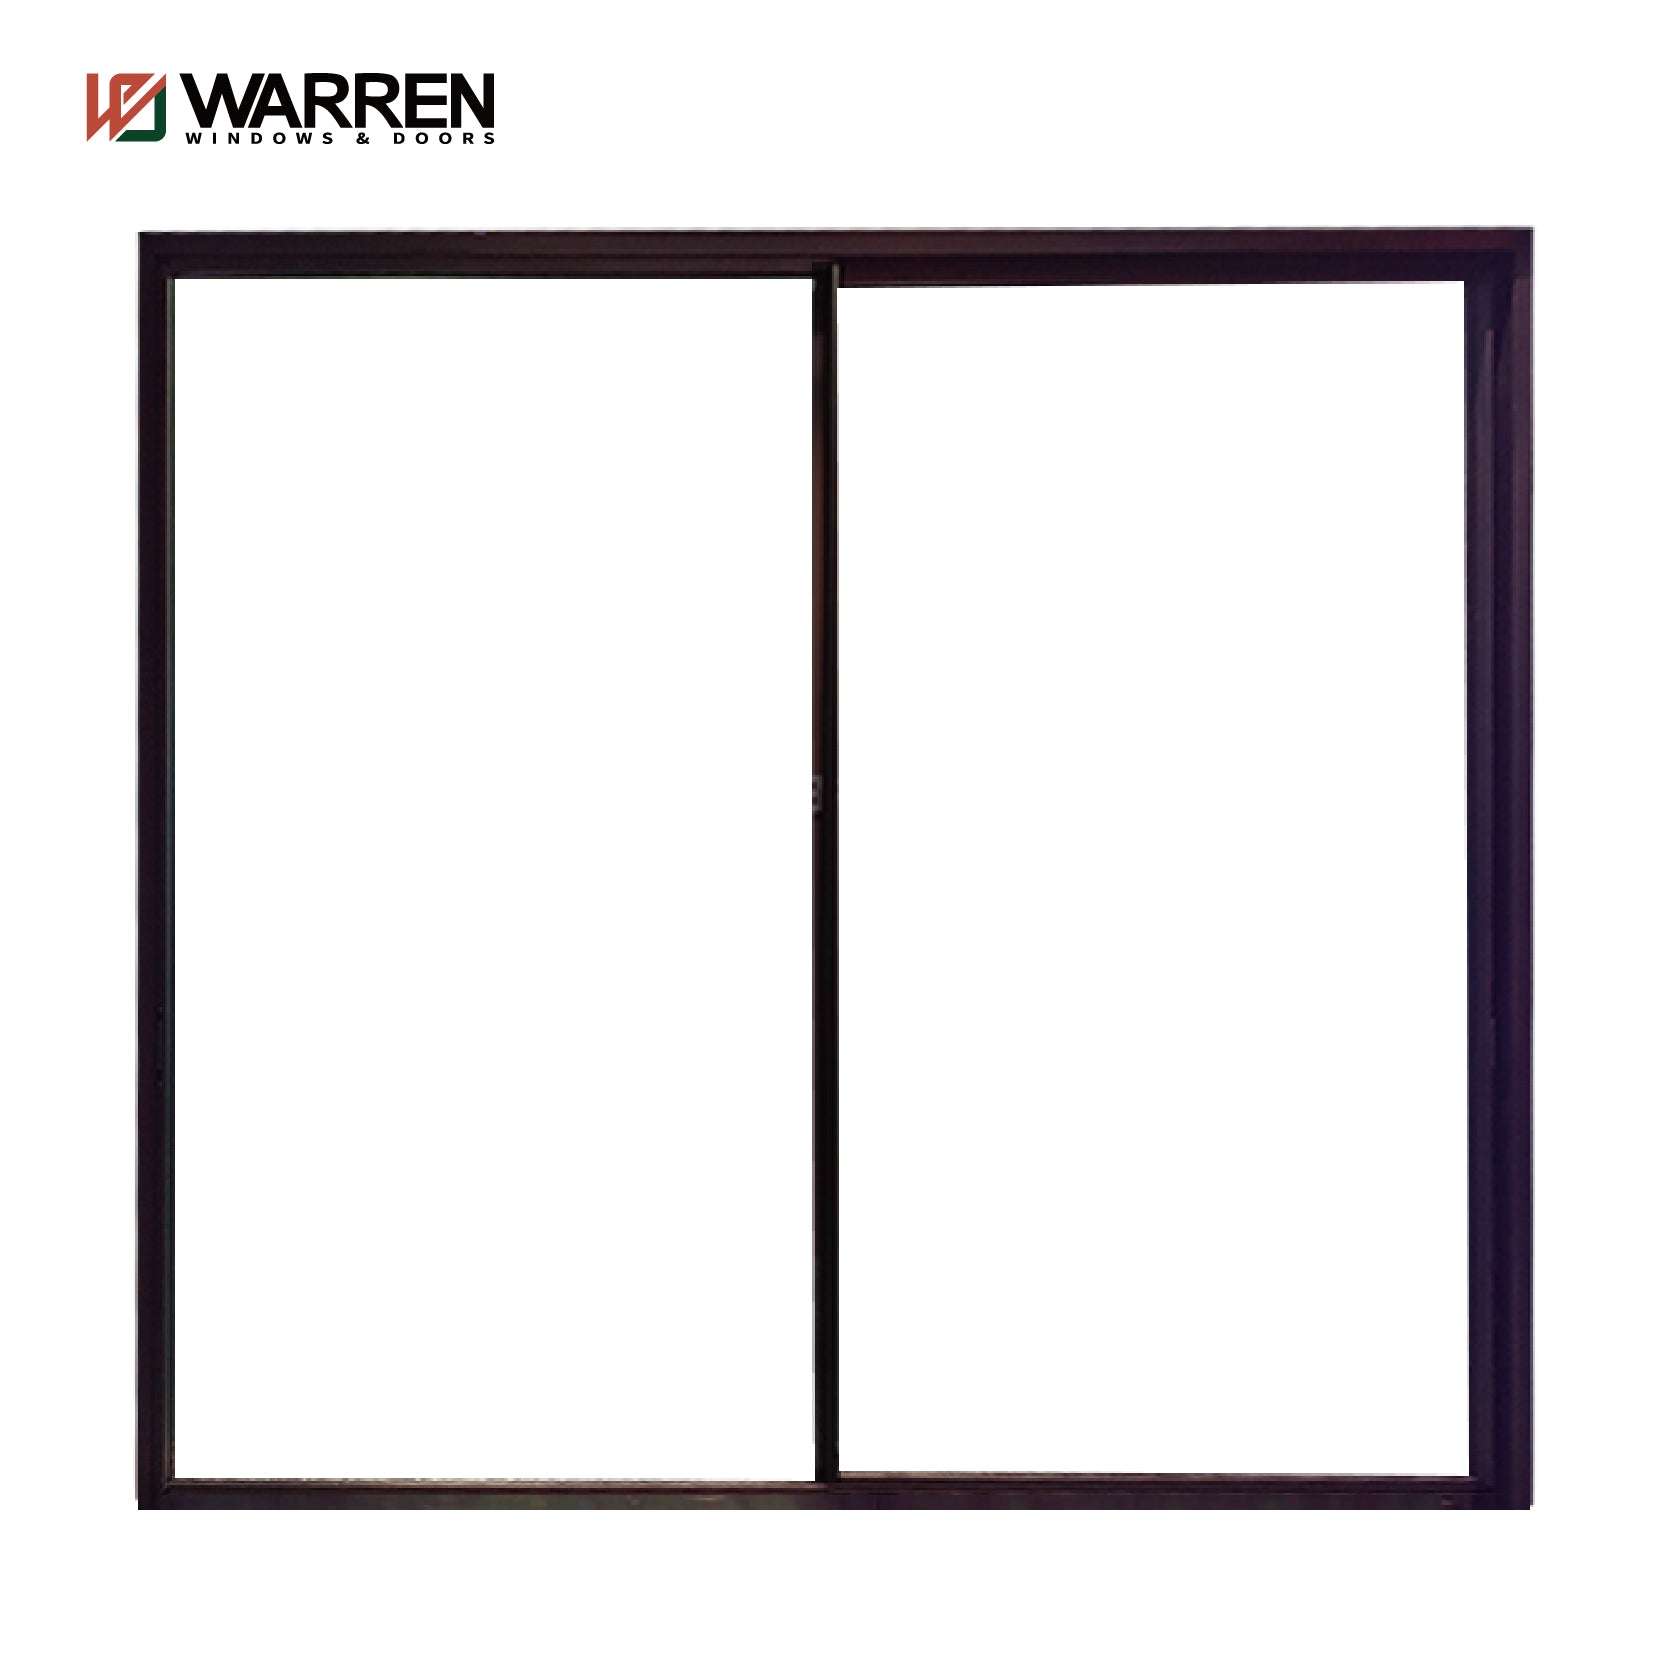 Warren Customized New Brand Good Quality Sliding Doors Double Glass Aluminum Sliding Glass Doors